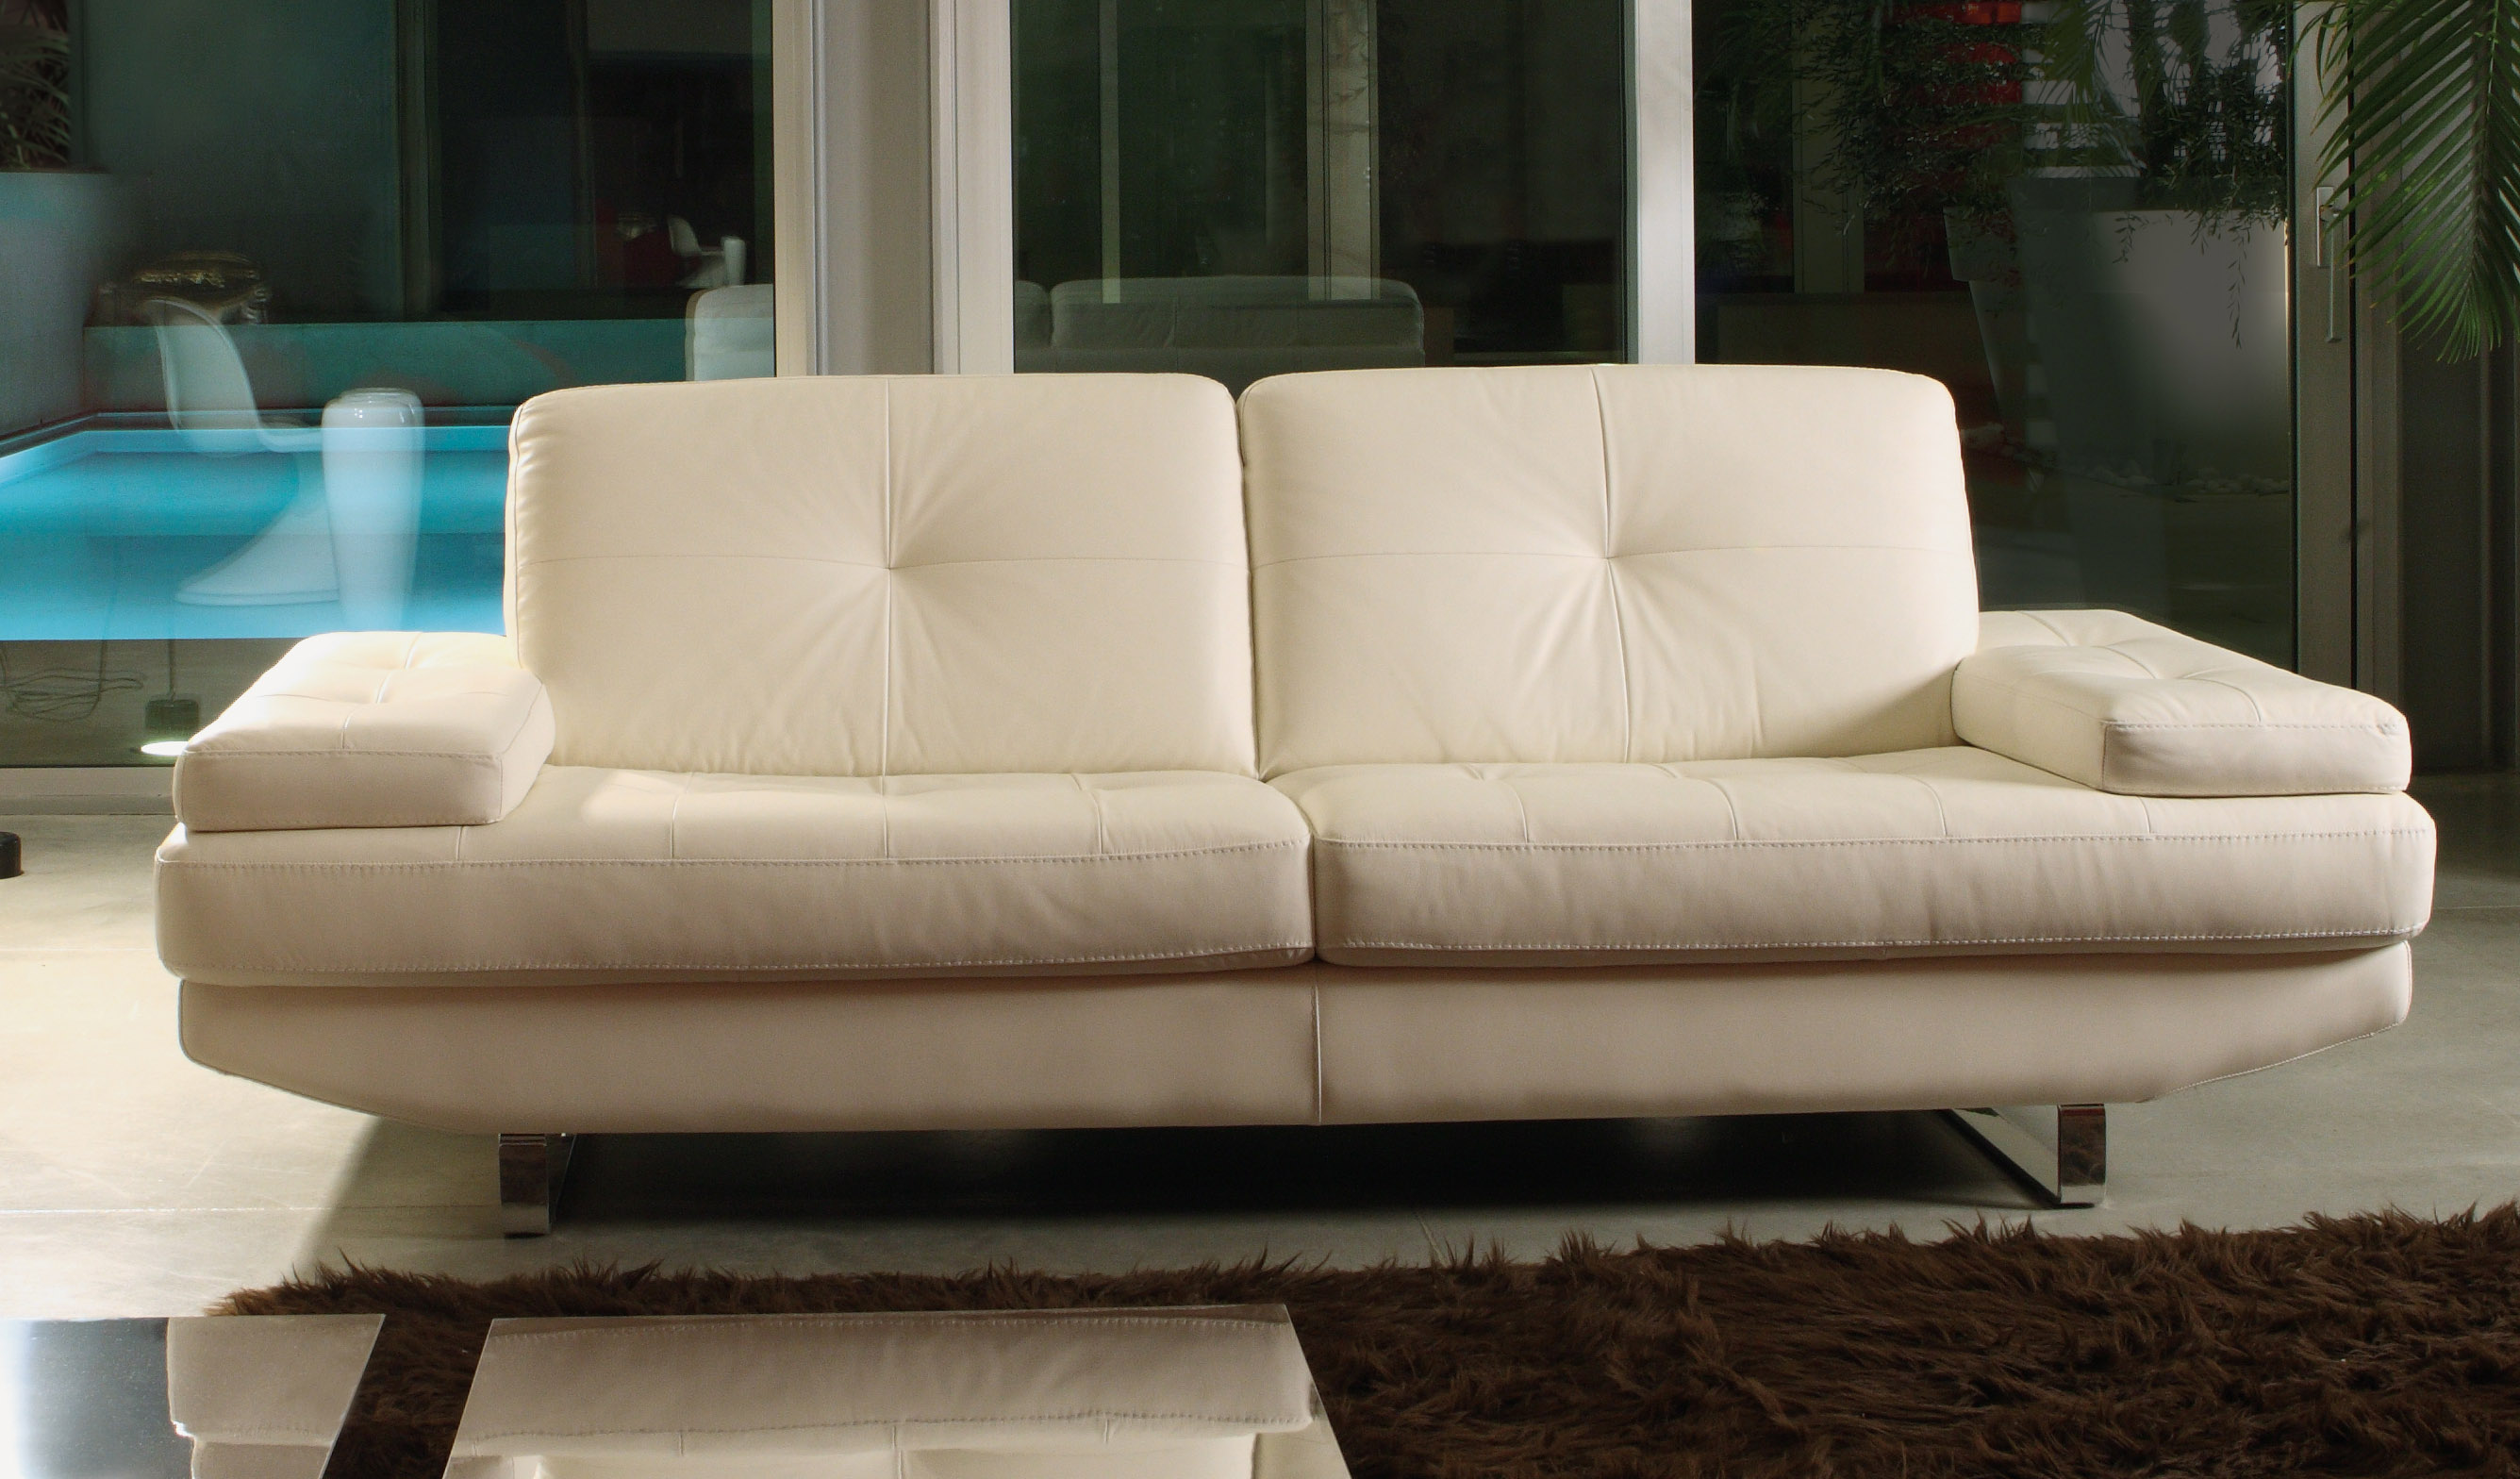 Sylish Cream Italian Leather 2 Pieced Living Room Sofa Set Charlotte North Carolina Antonio